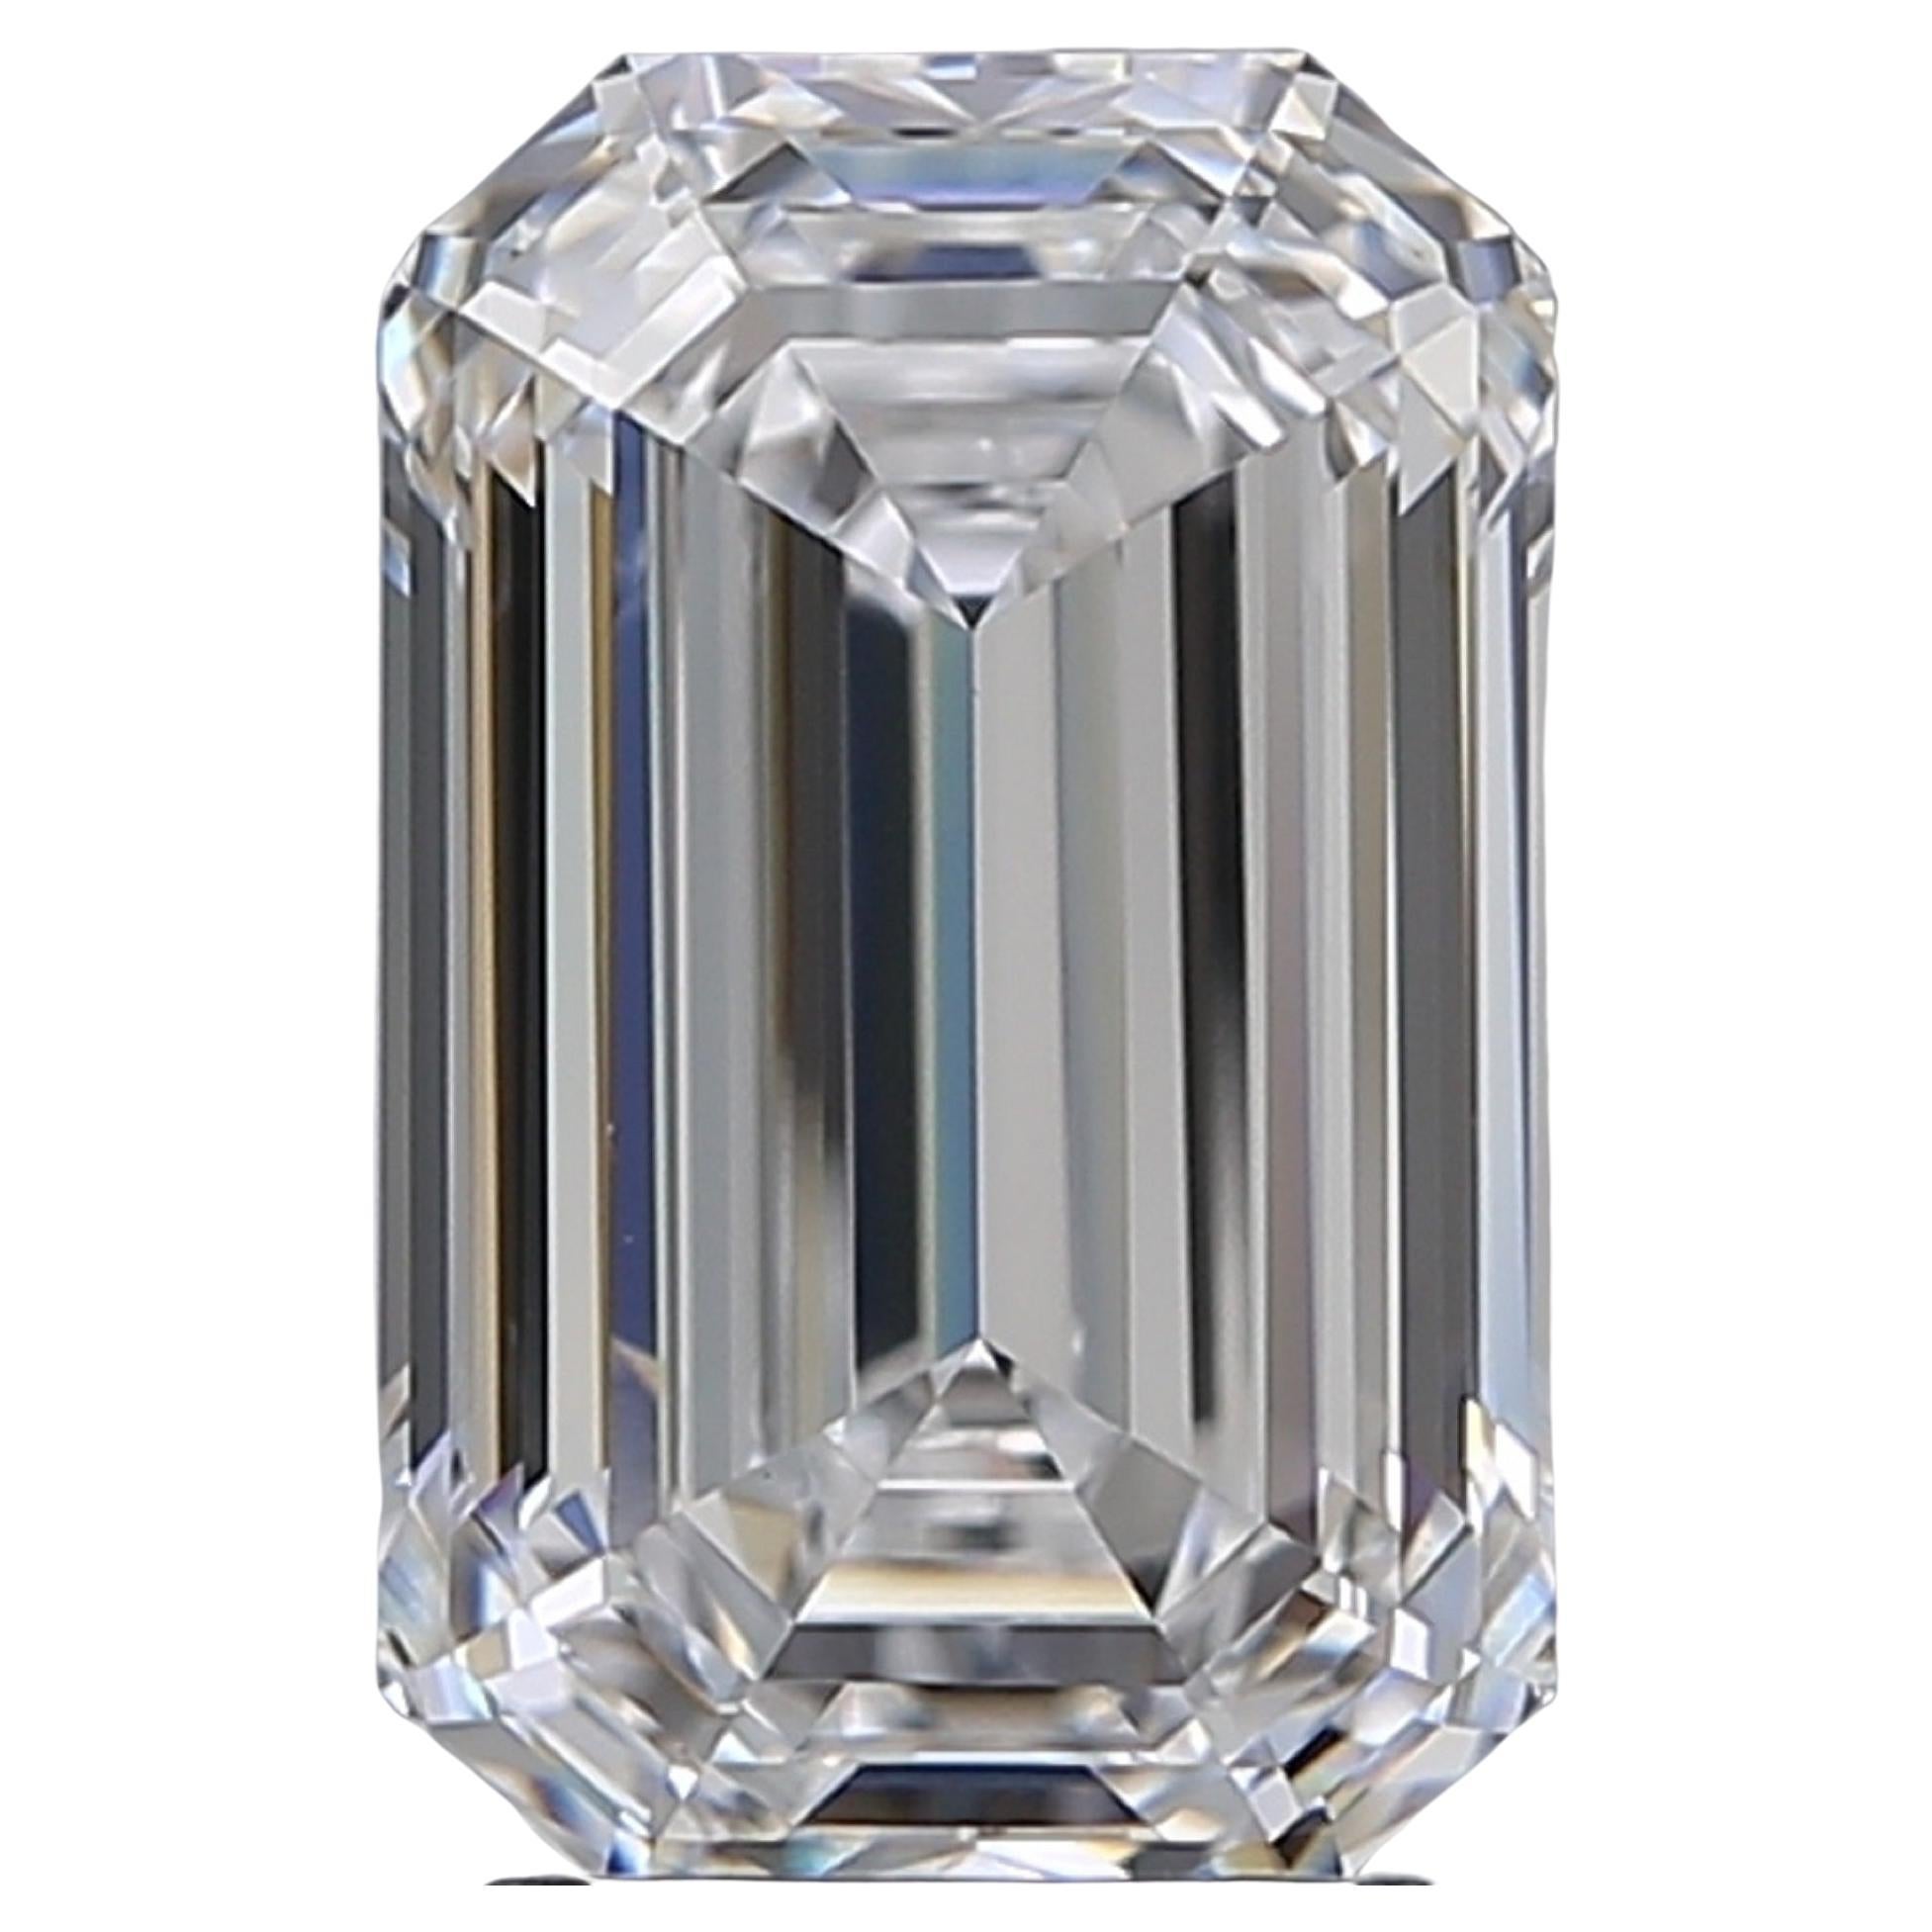 3 stone emerald cut diamond ring